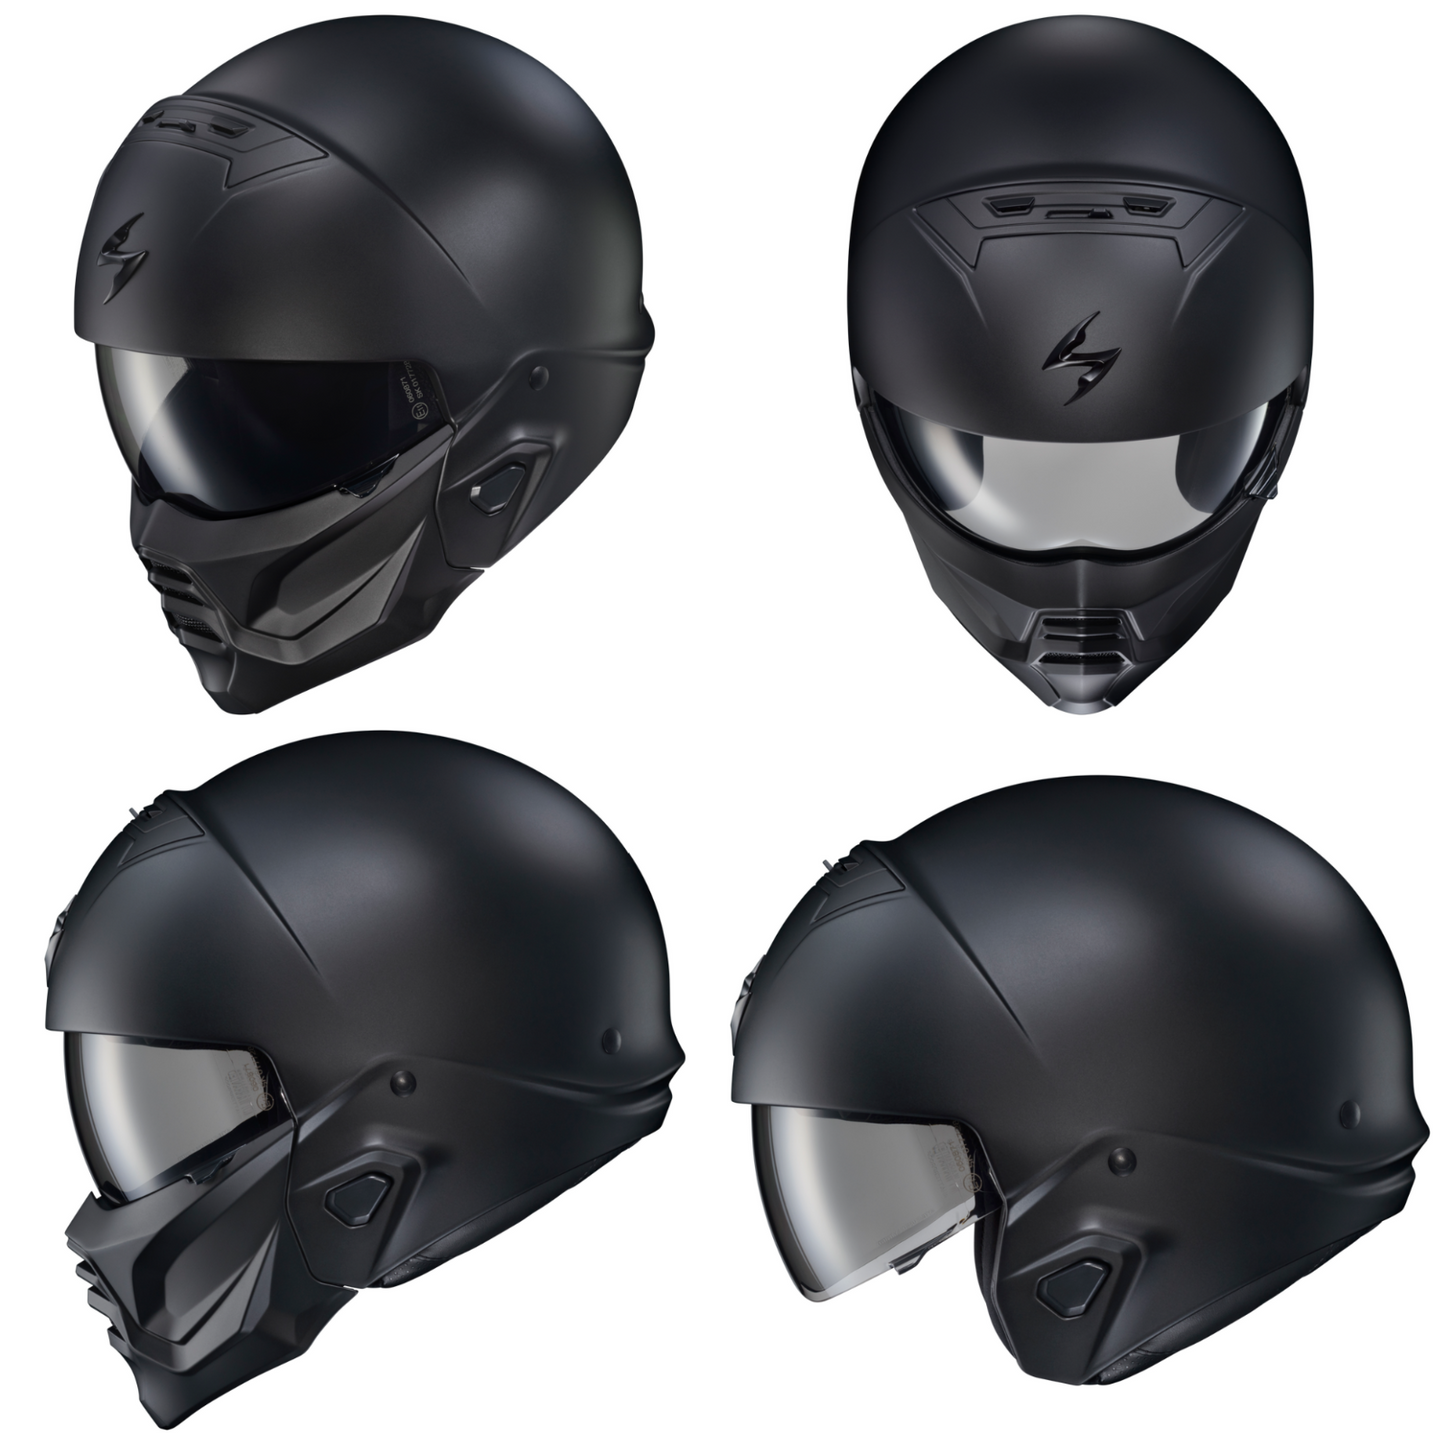 New Scorpion Exo Covert 2 Open Face Matte Black Motorcycle Helmet DOT SIZE M USED CO: 454904O